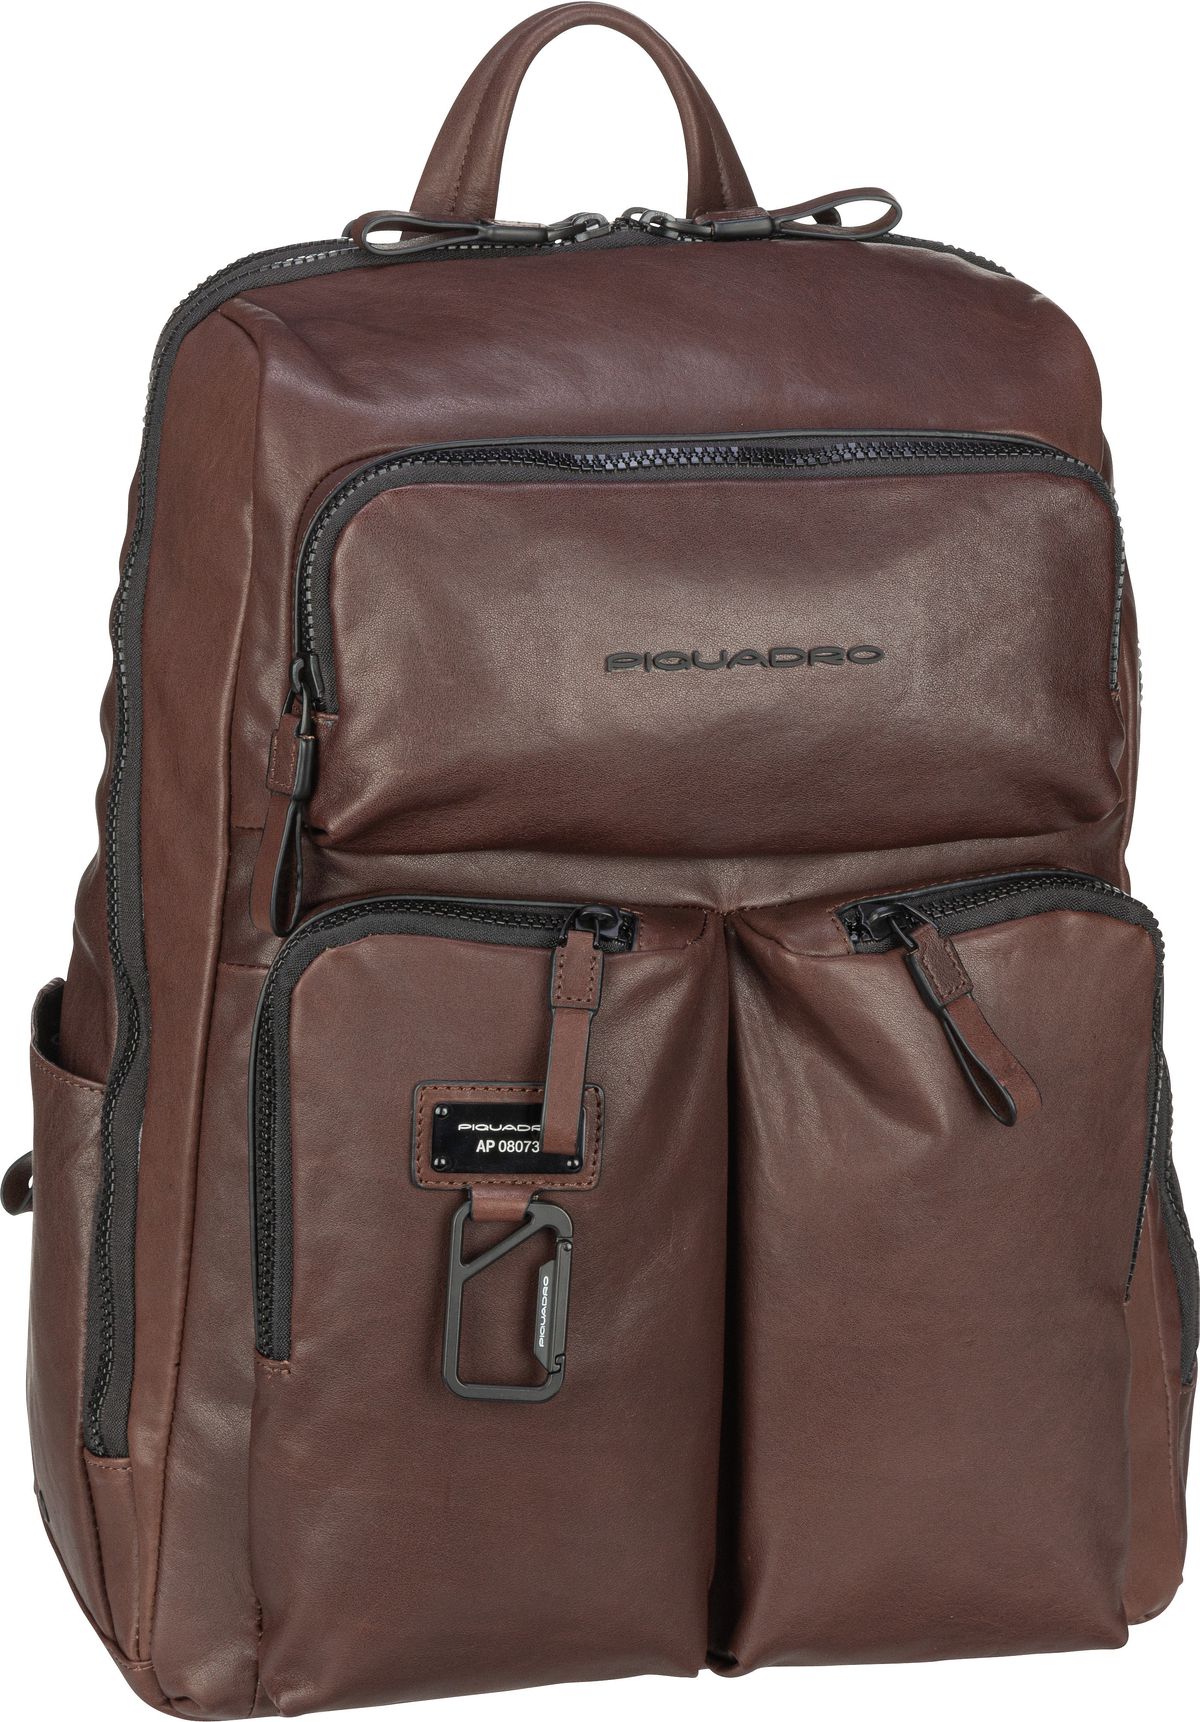 Piquadro Harper Laptop Backpack 3349 - Testa di moro